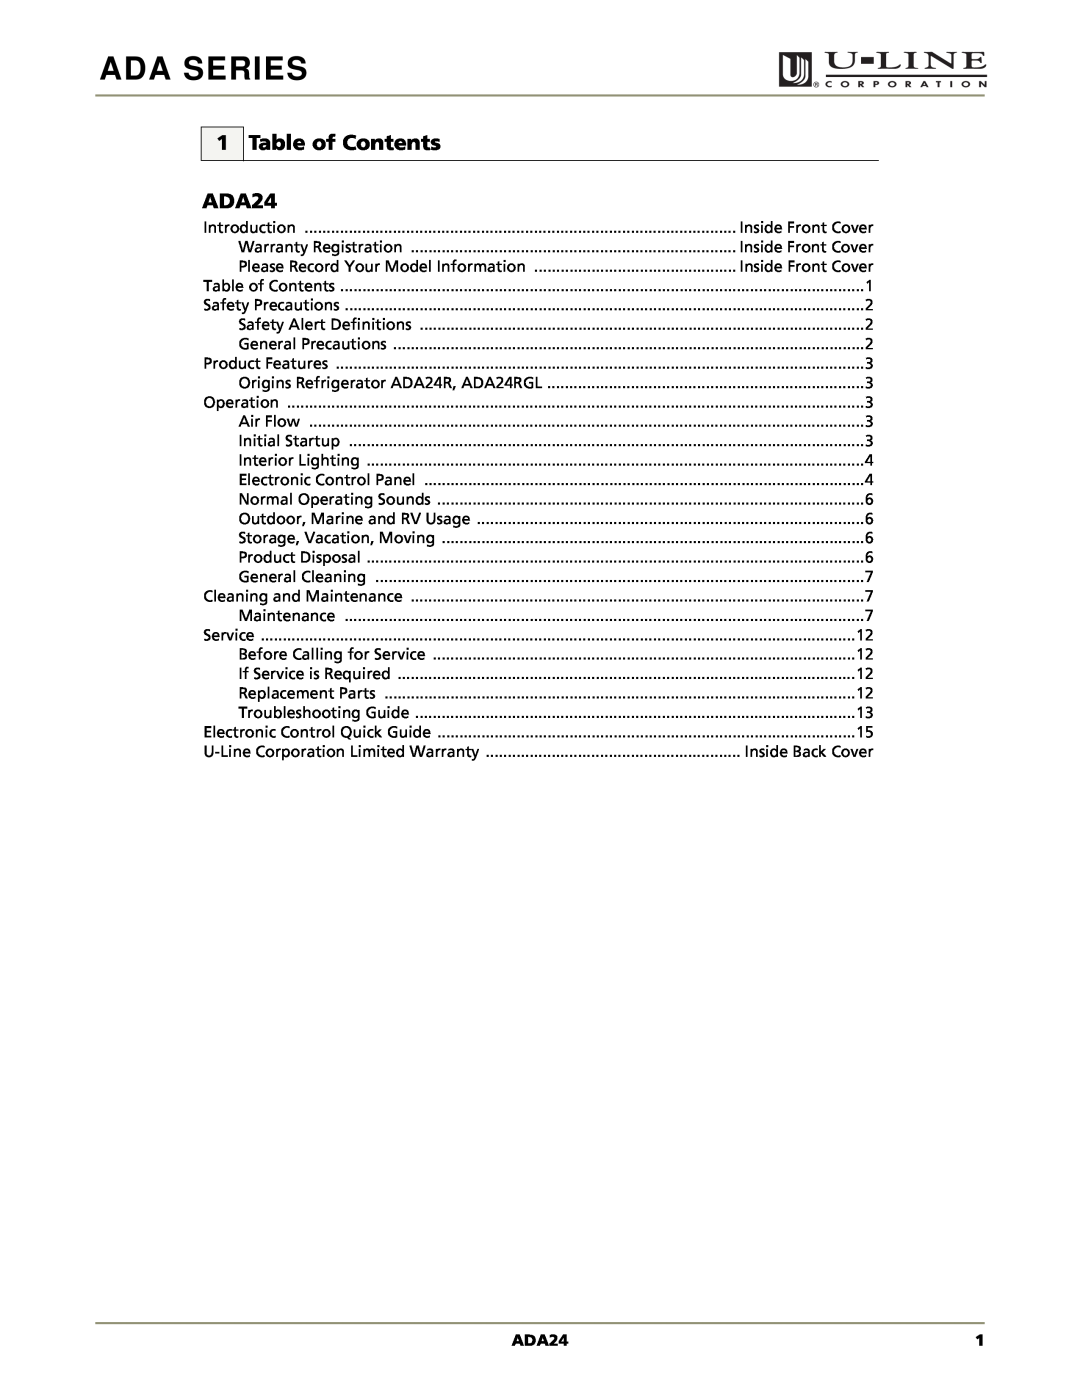 U-Line ADA24RGL manual Table of Contents, Ada Series 